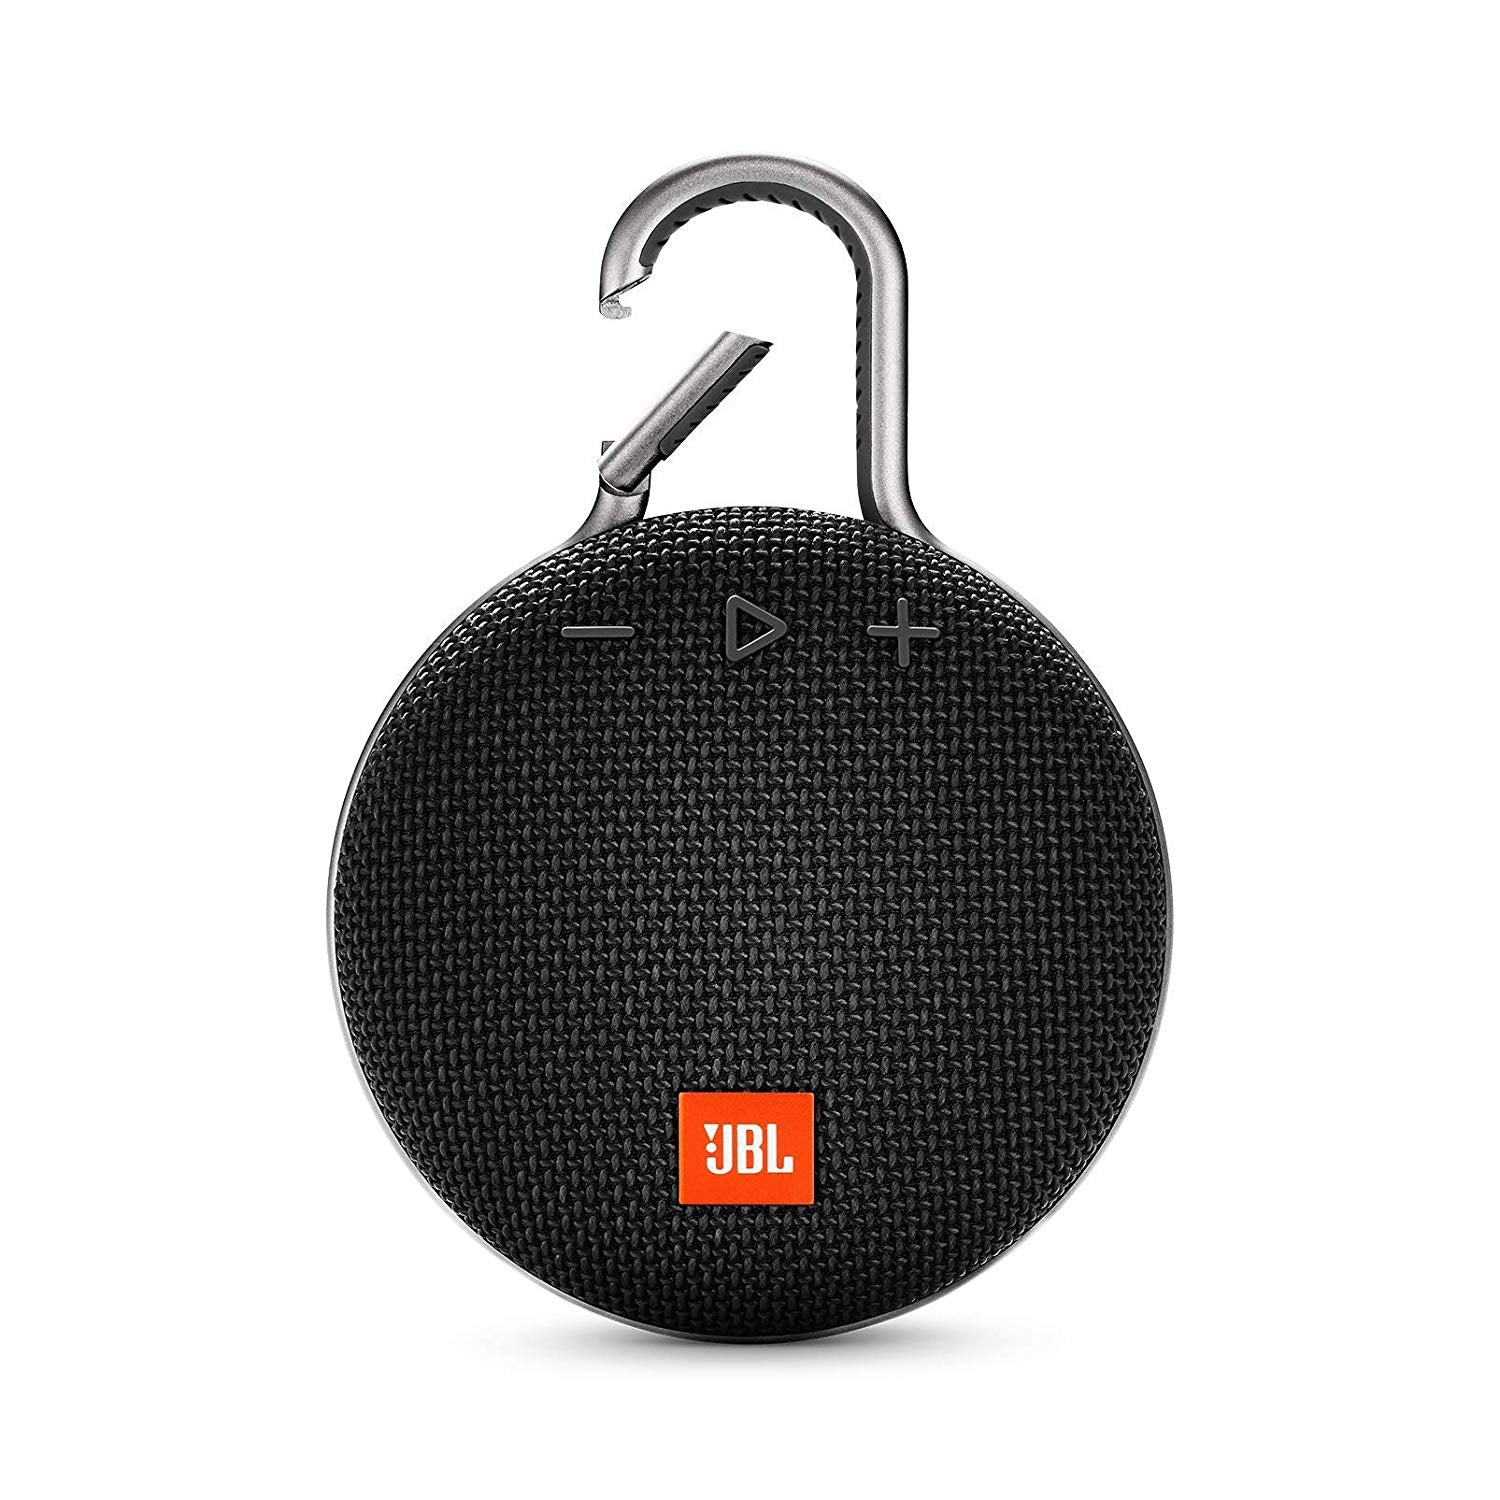 JBL Clip 3 Waterproof Wireless Portable Bluetooth Speaker - Midnight Black (Refurbished)